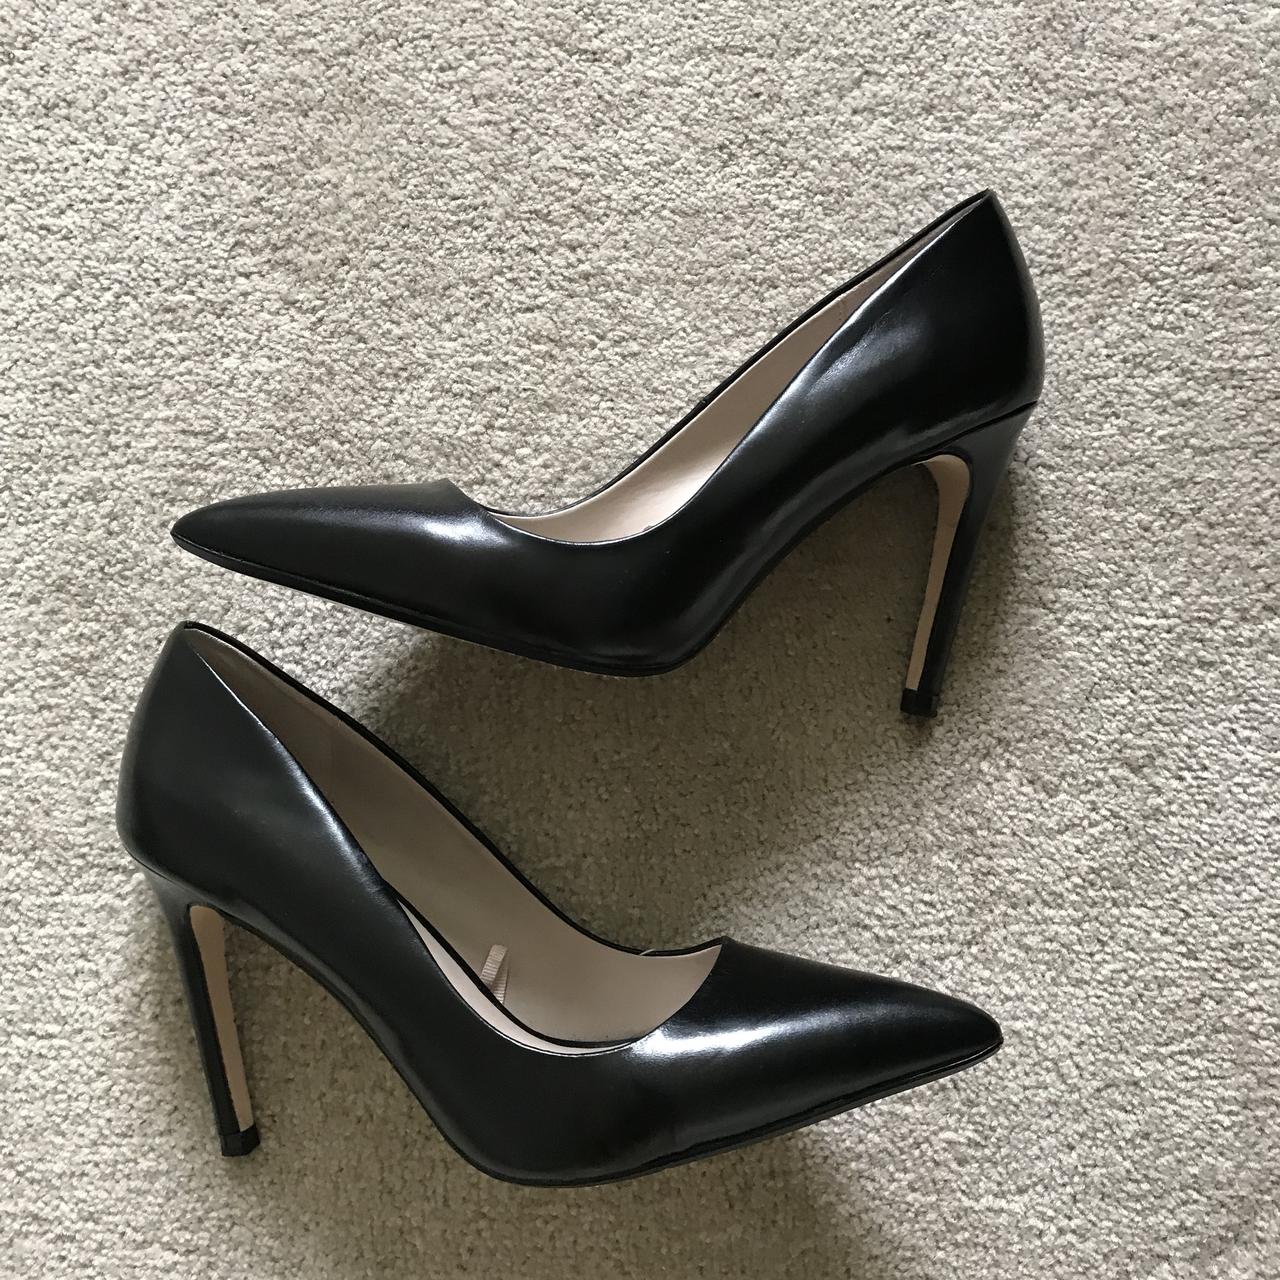 Zara stiletto heels Black Beautiful classic... - Depop